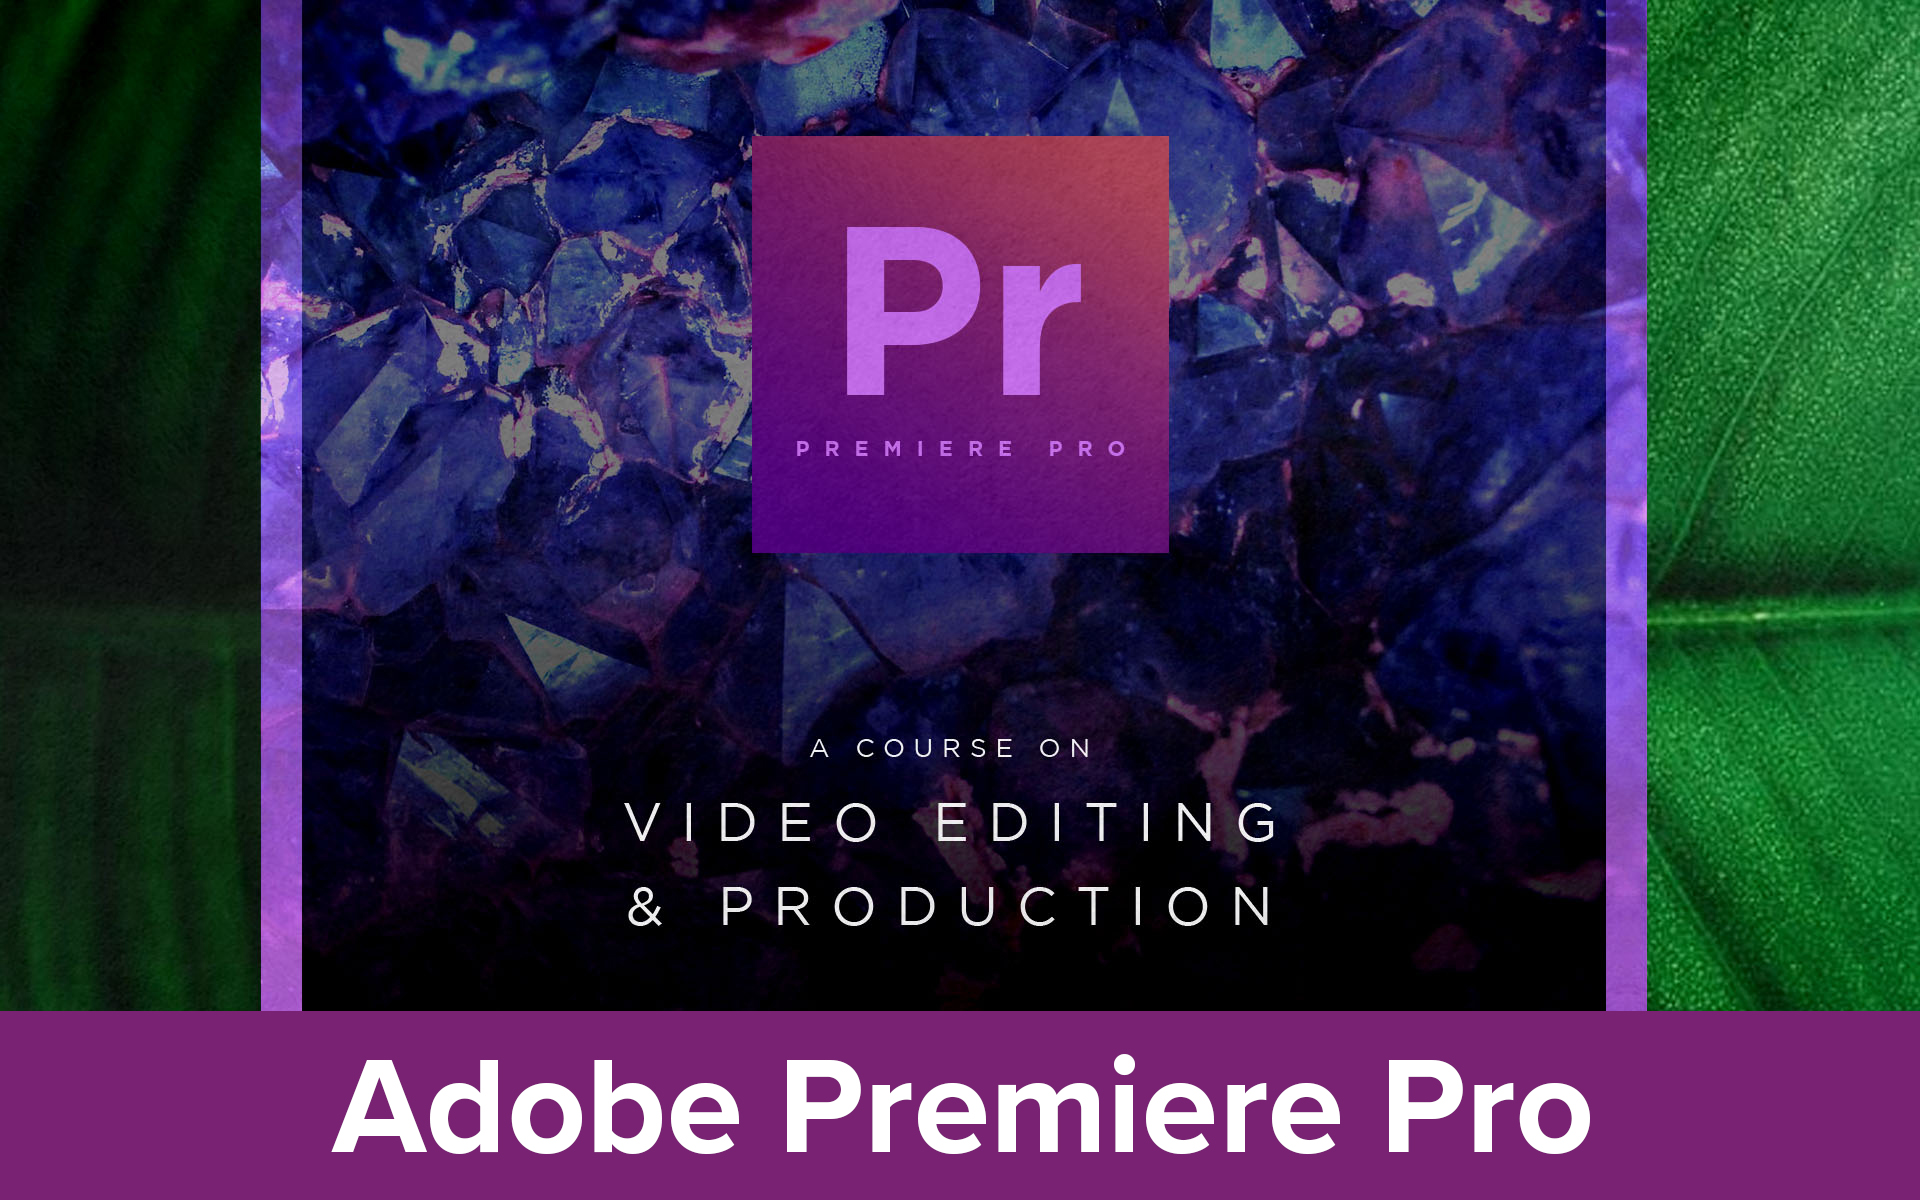 adobe premiere pro certification